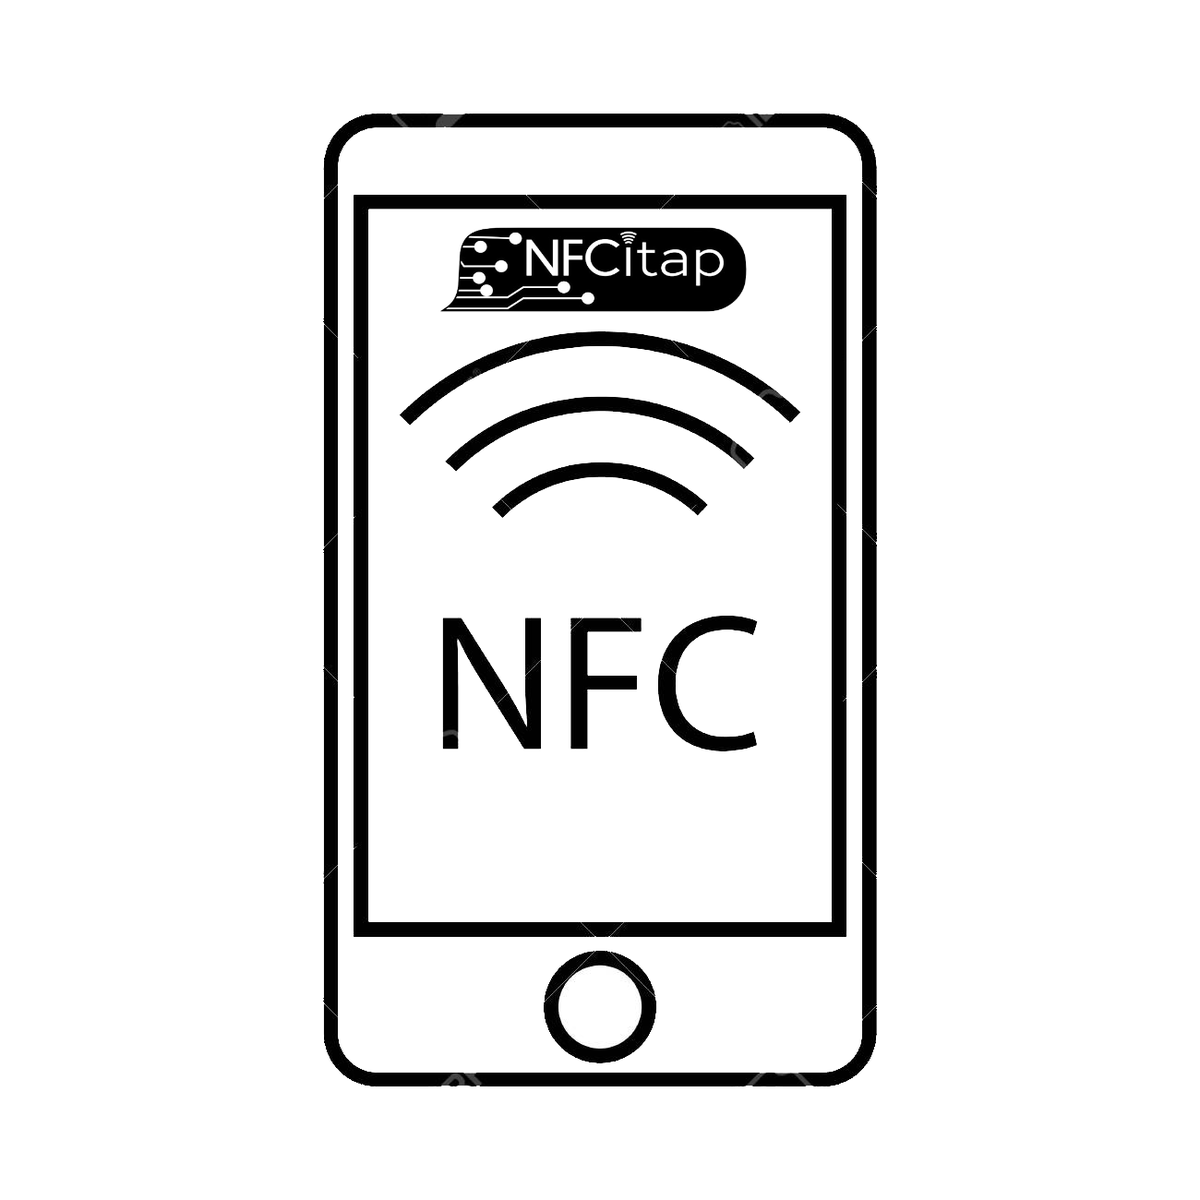 NFCITAP NFC BUSINESS CARDS
#nfcbusinesscard #businesscards #SmartBusinessCard #DigitalBusinessCard